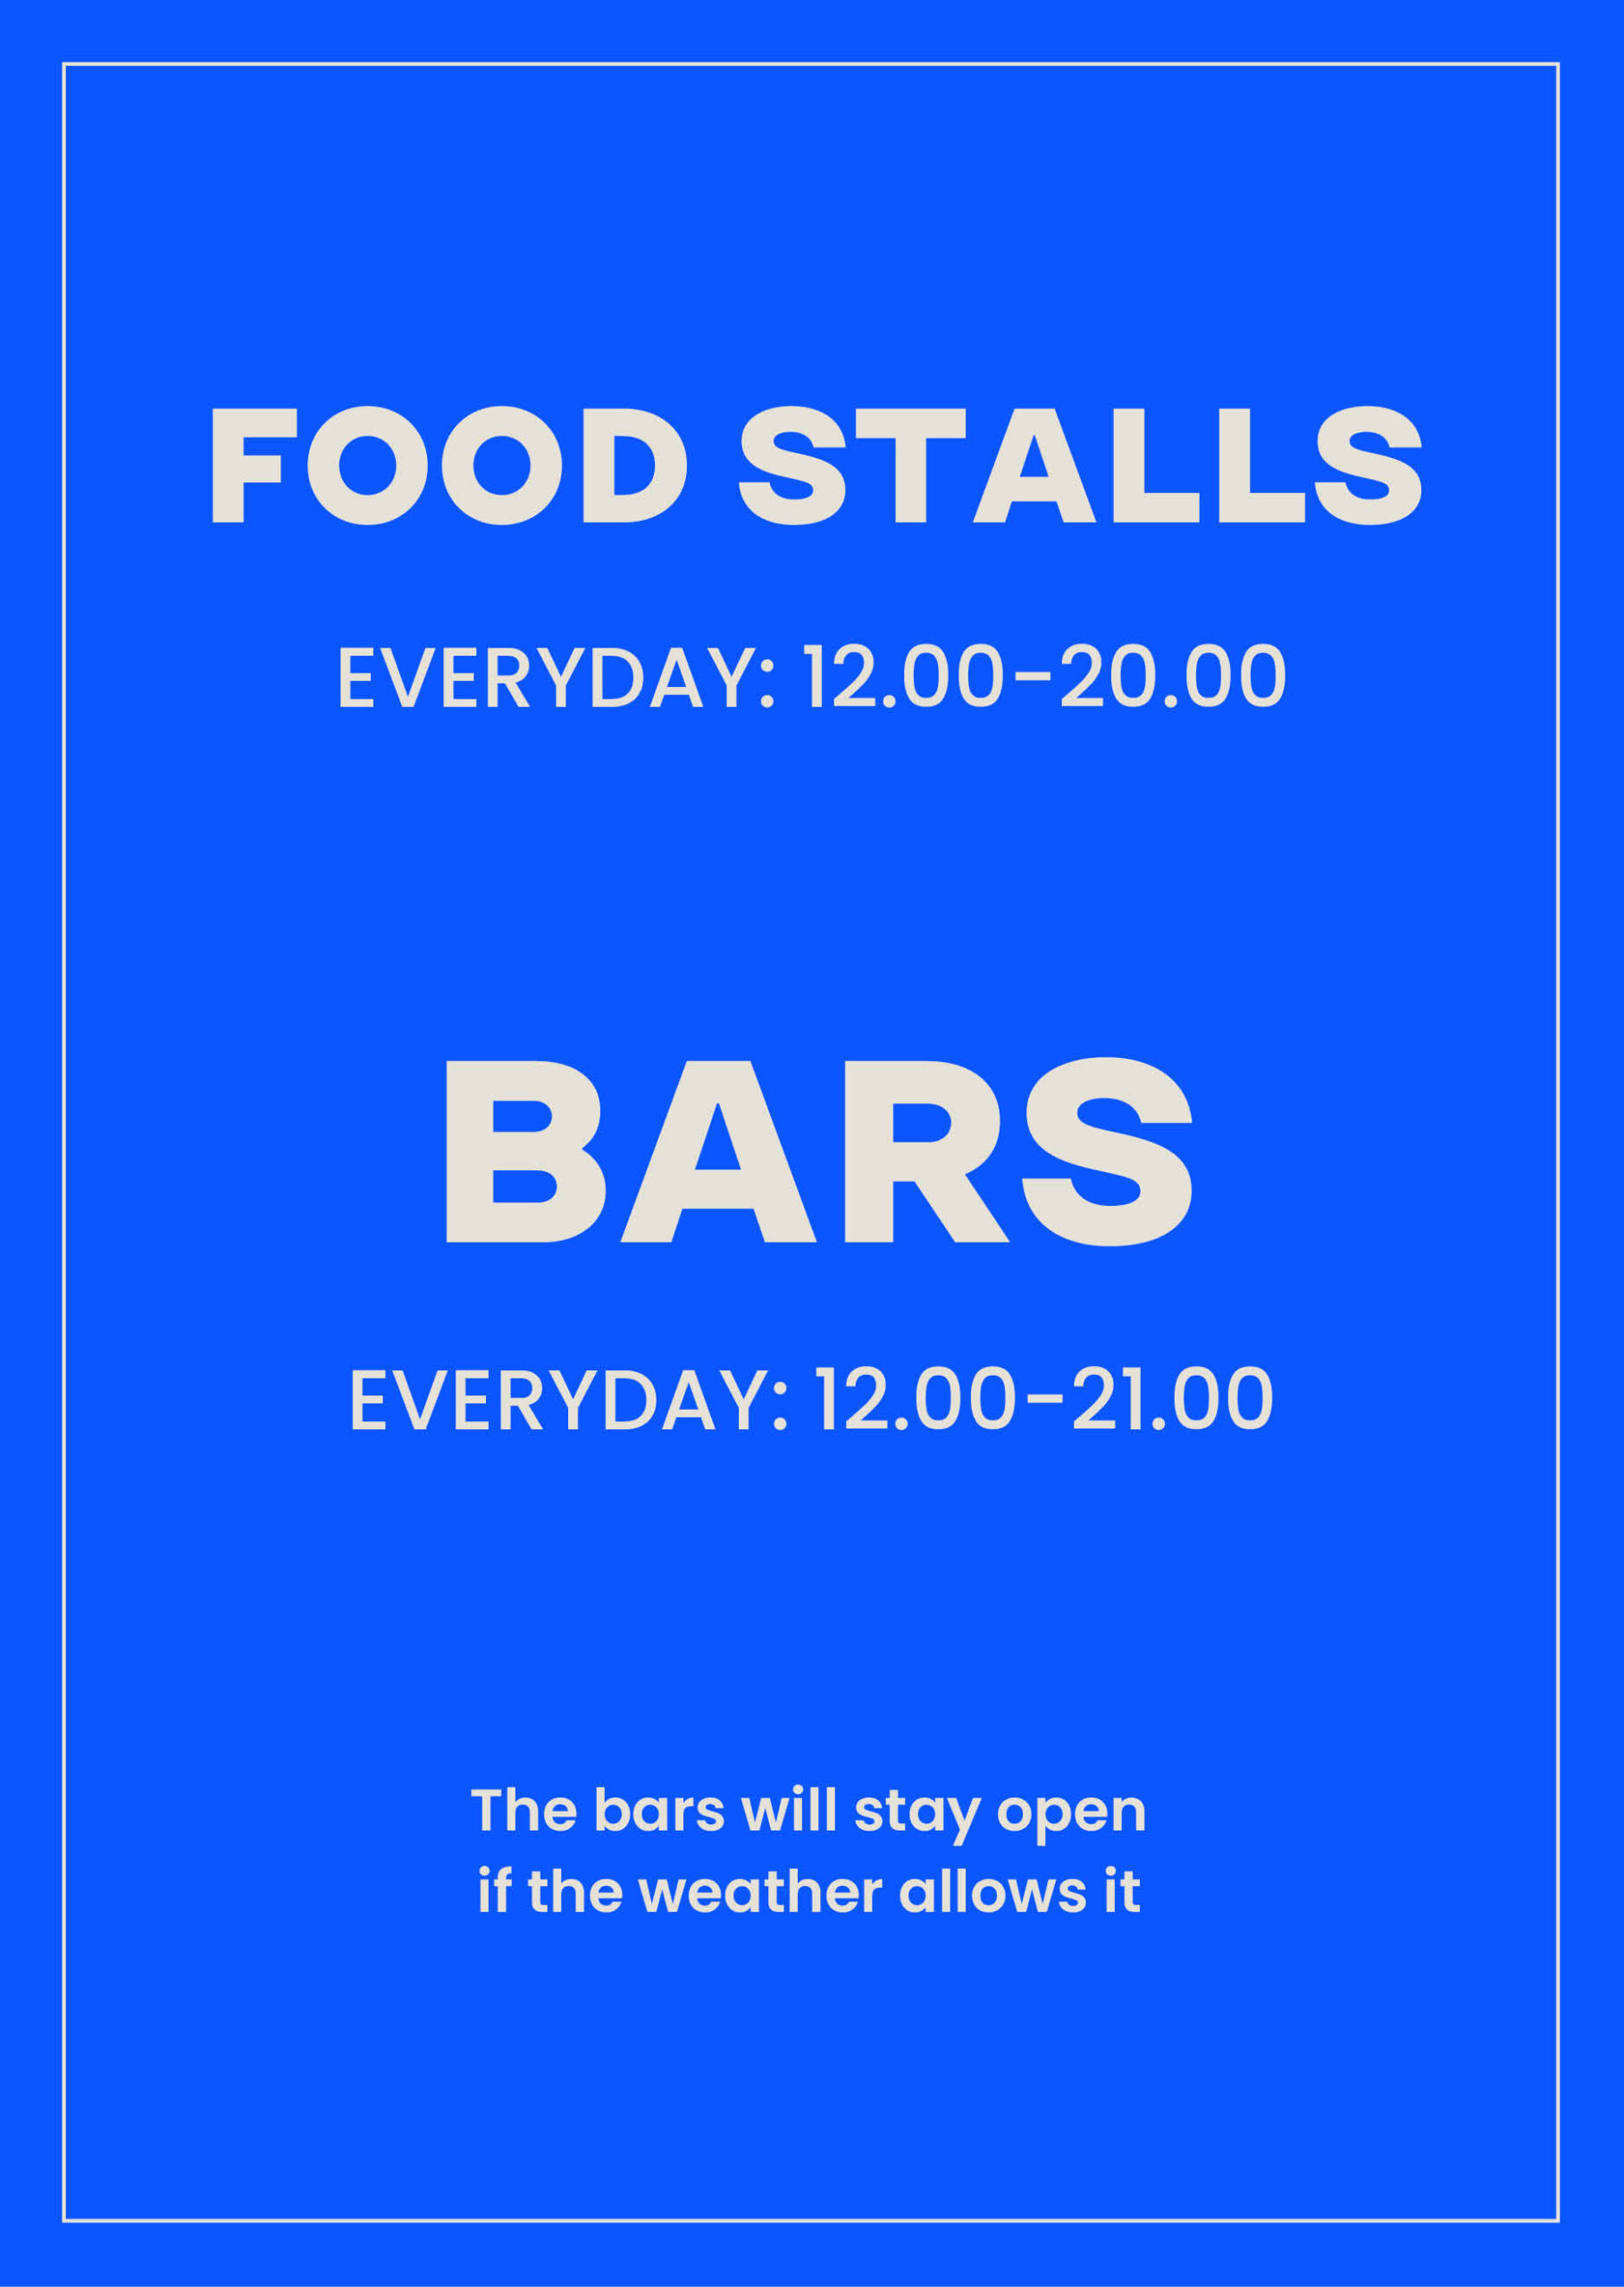 Opening hours at Broens Street Food